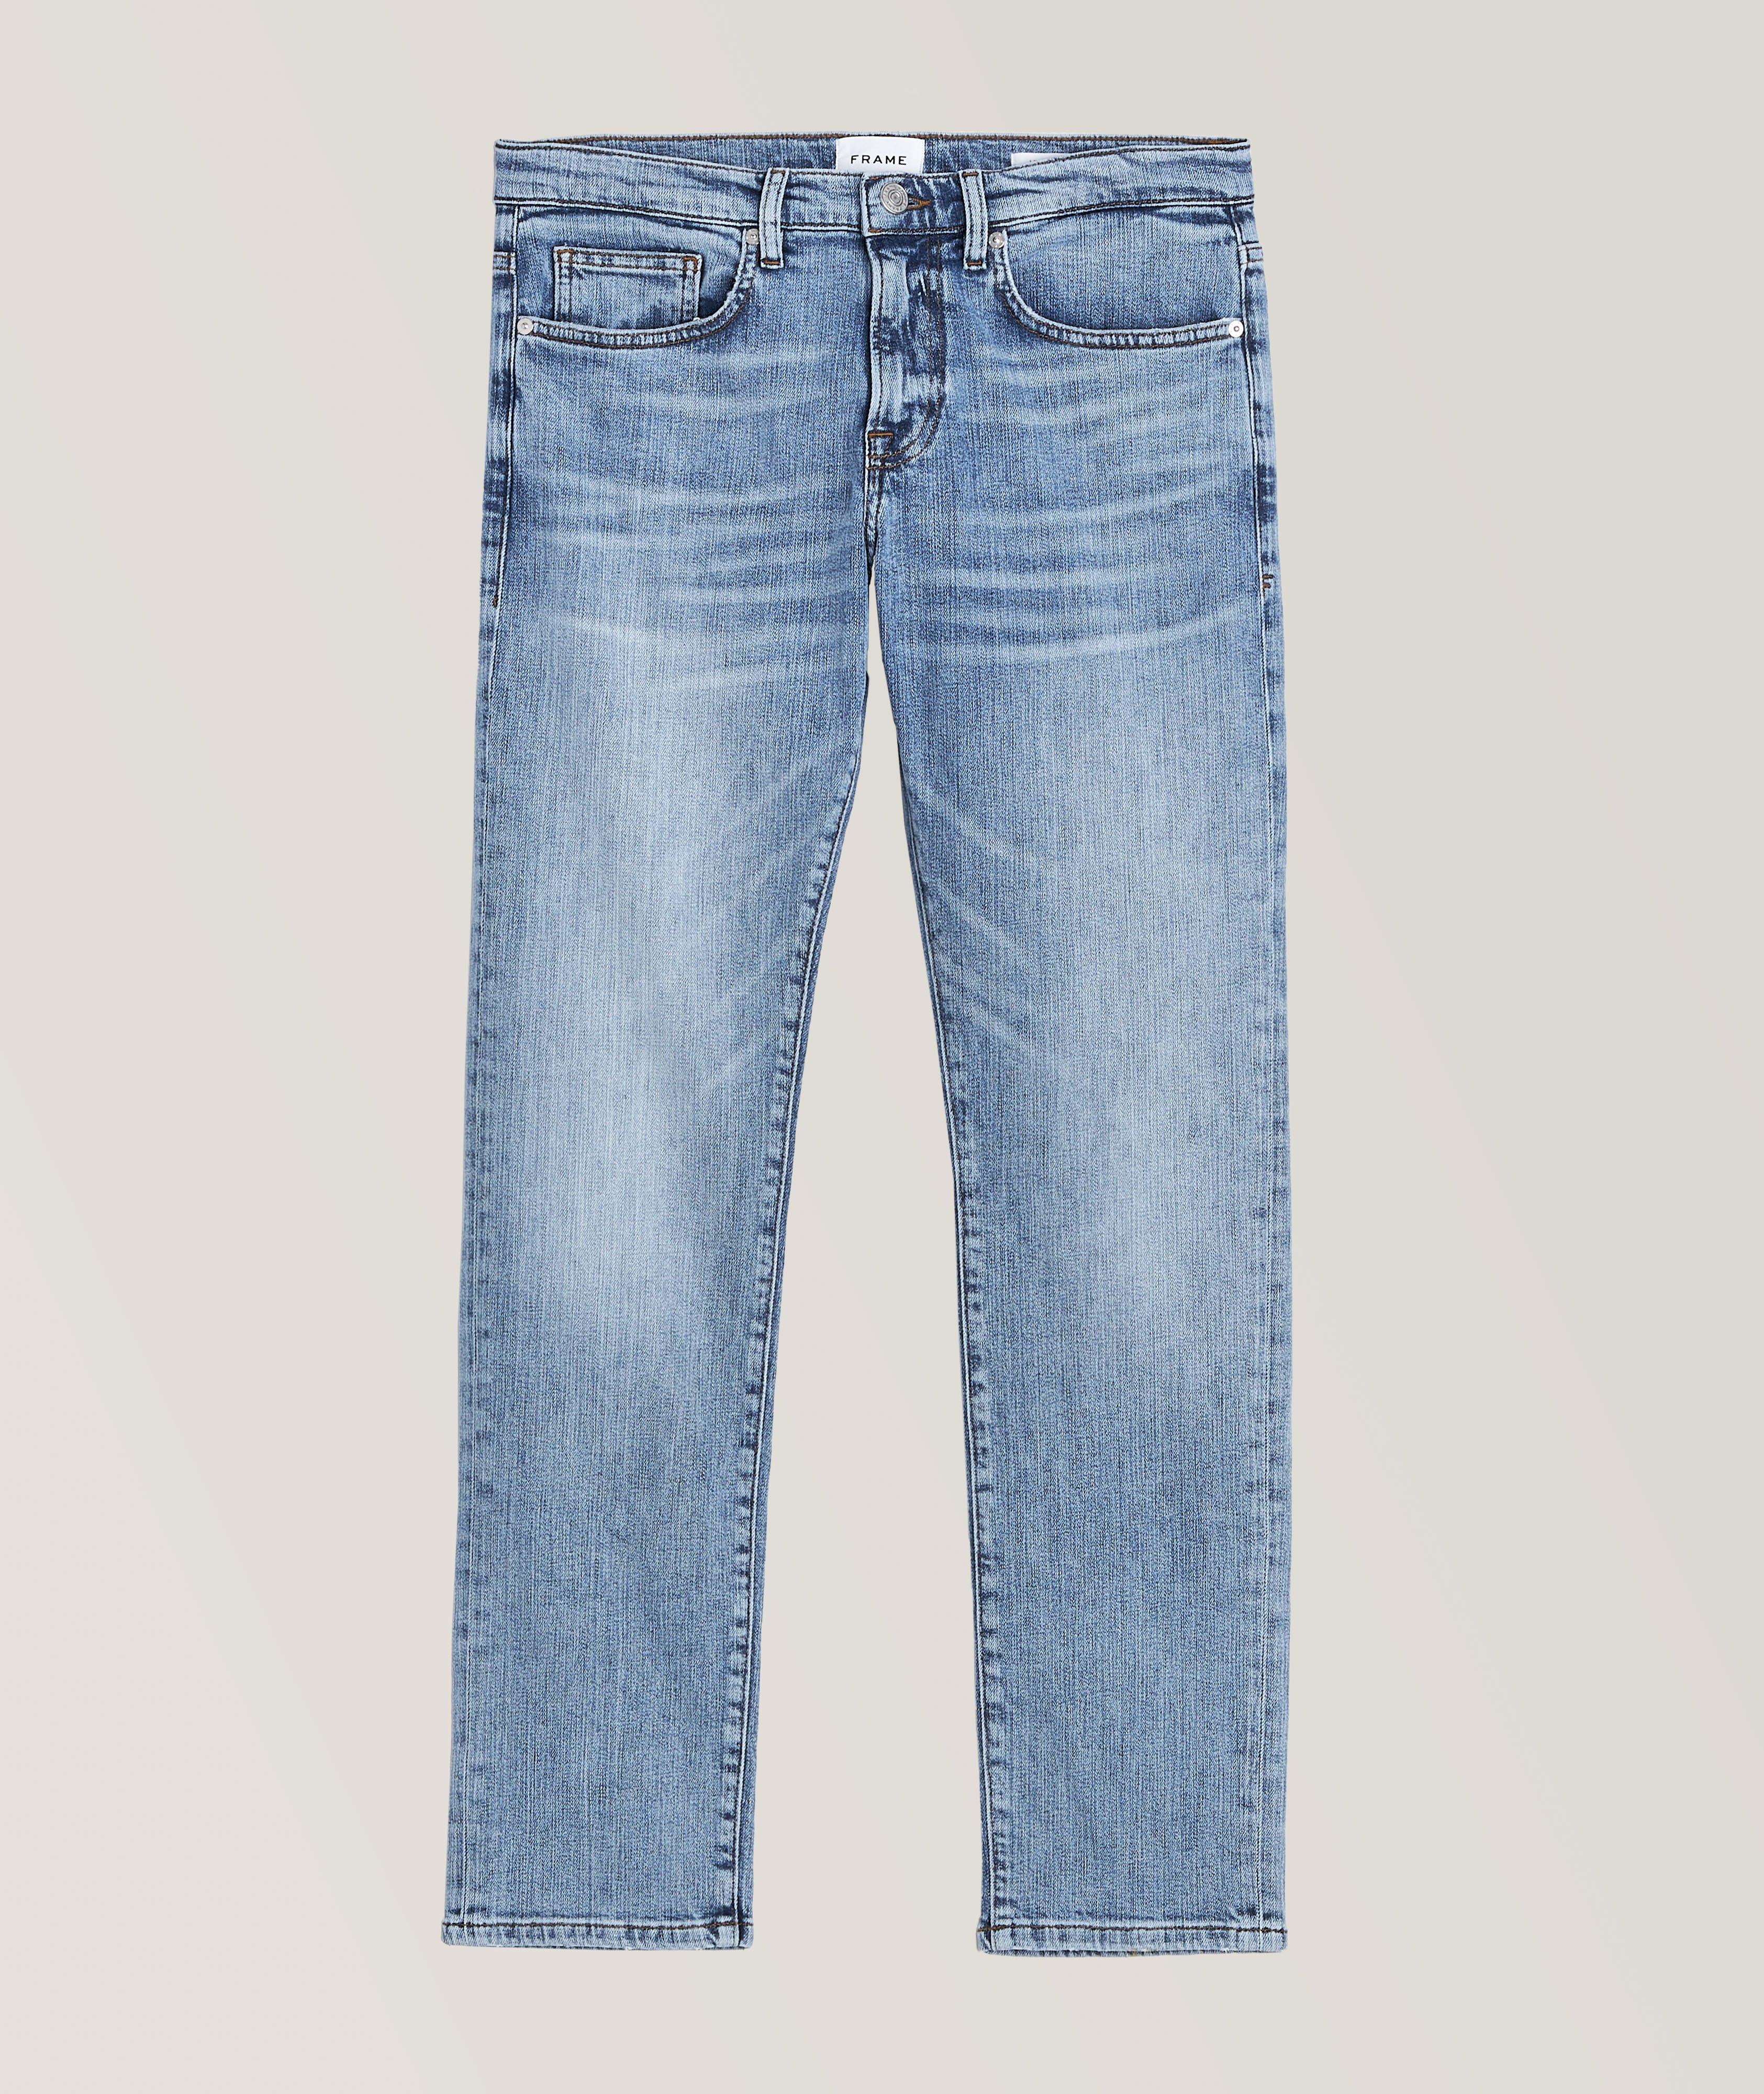 L'Homme Slim-Fit Distressed Jeans